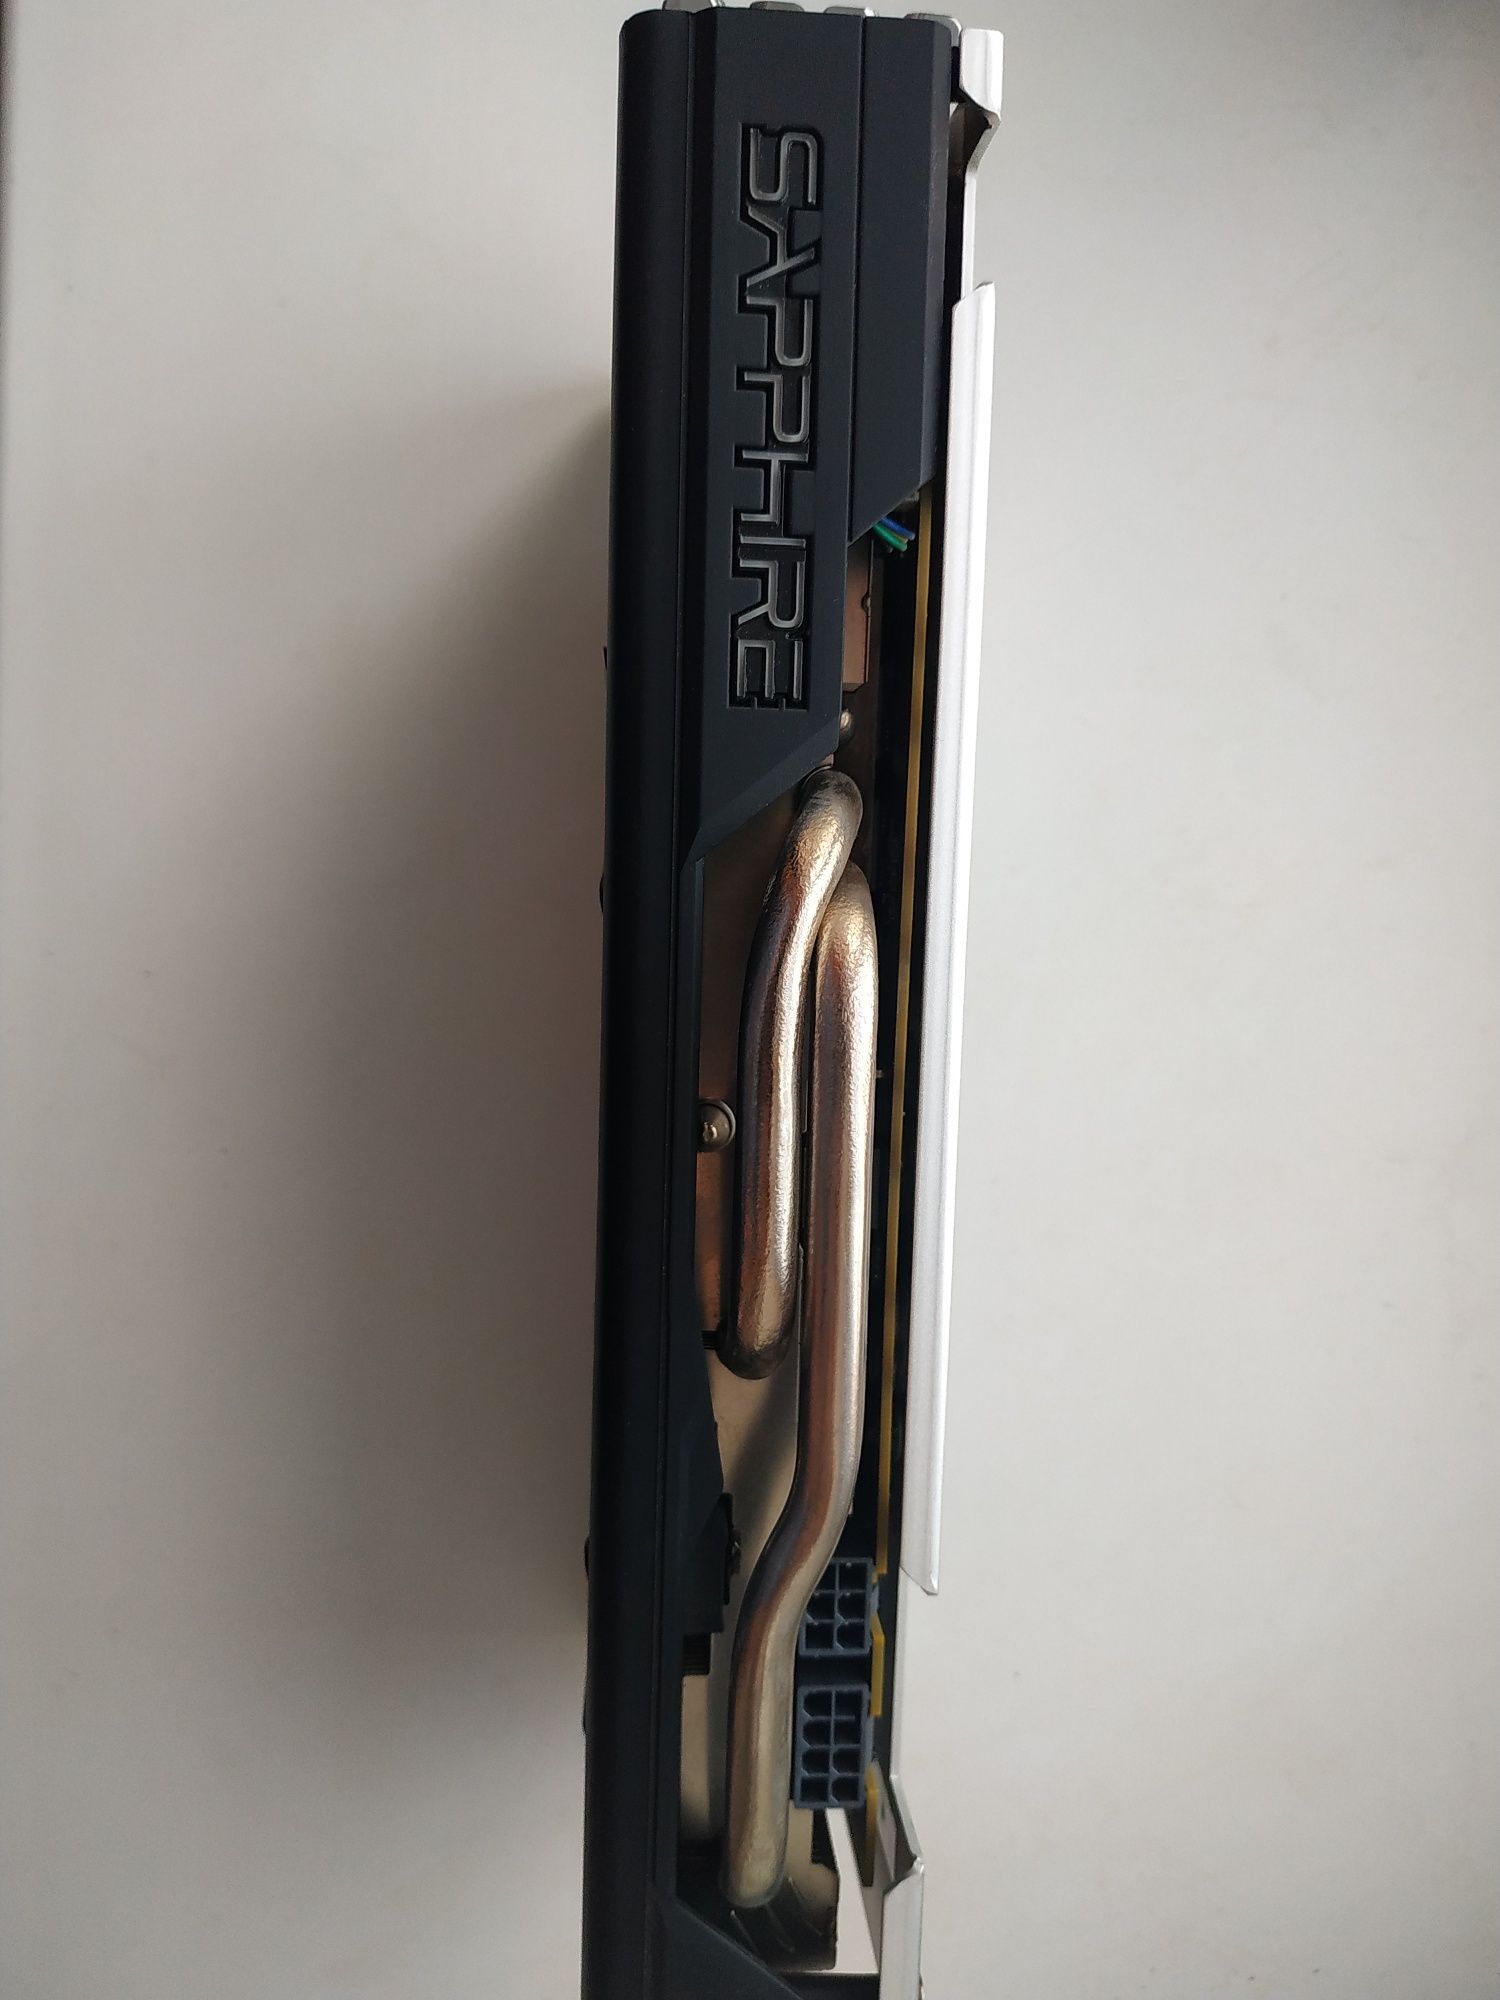 Видеокарта Radeon RX 580 8GB Sapphire Nitro+